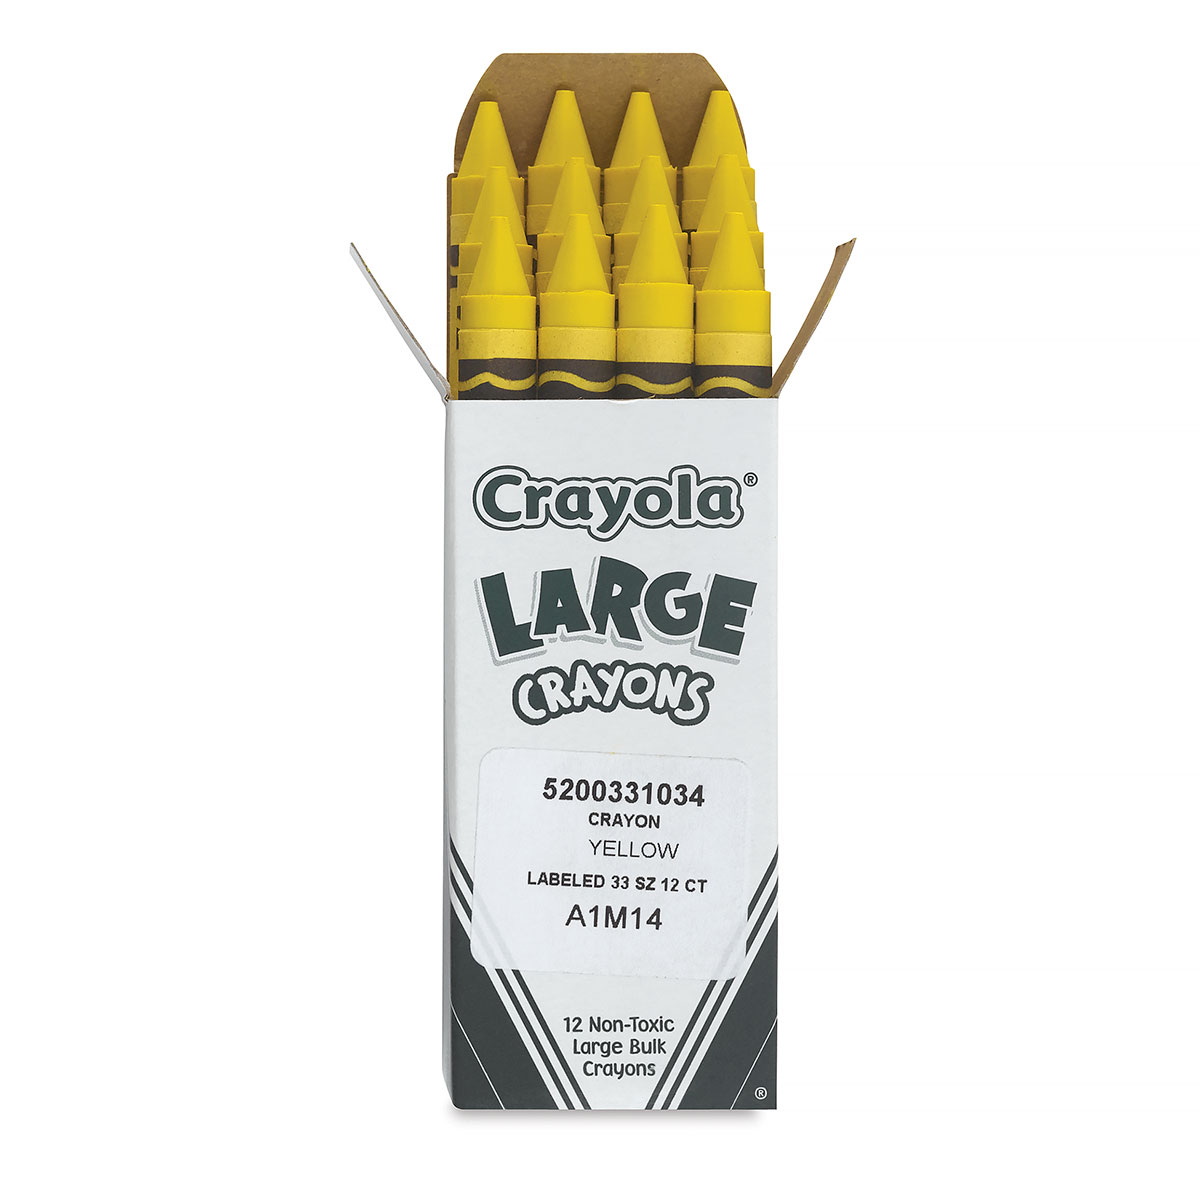 Crayola Large Crayons, 12 Pack, Yellow (52-0033-034)